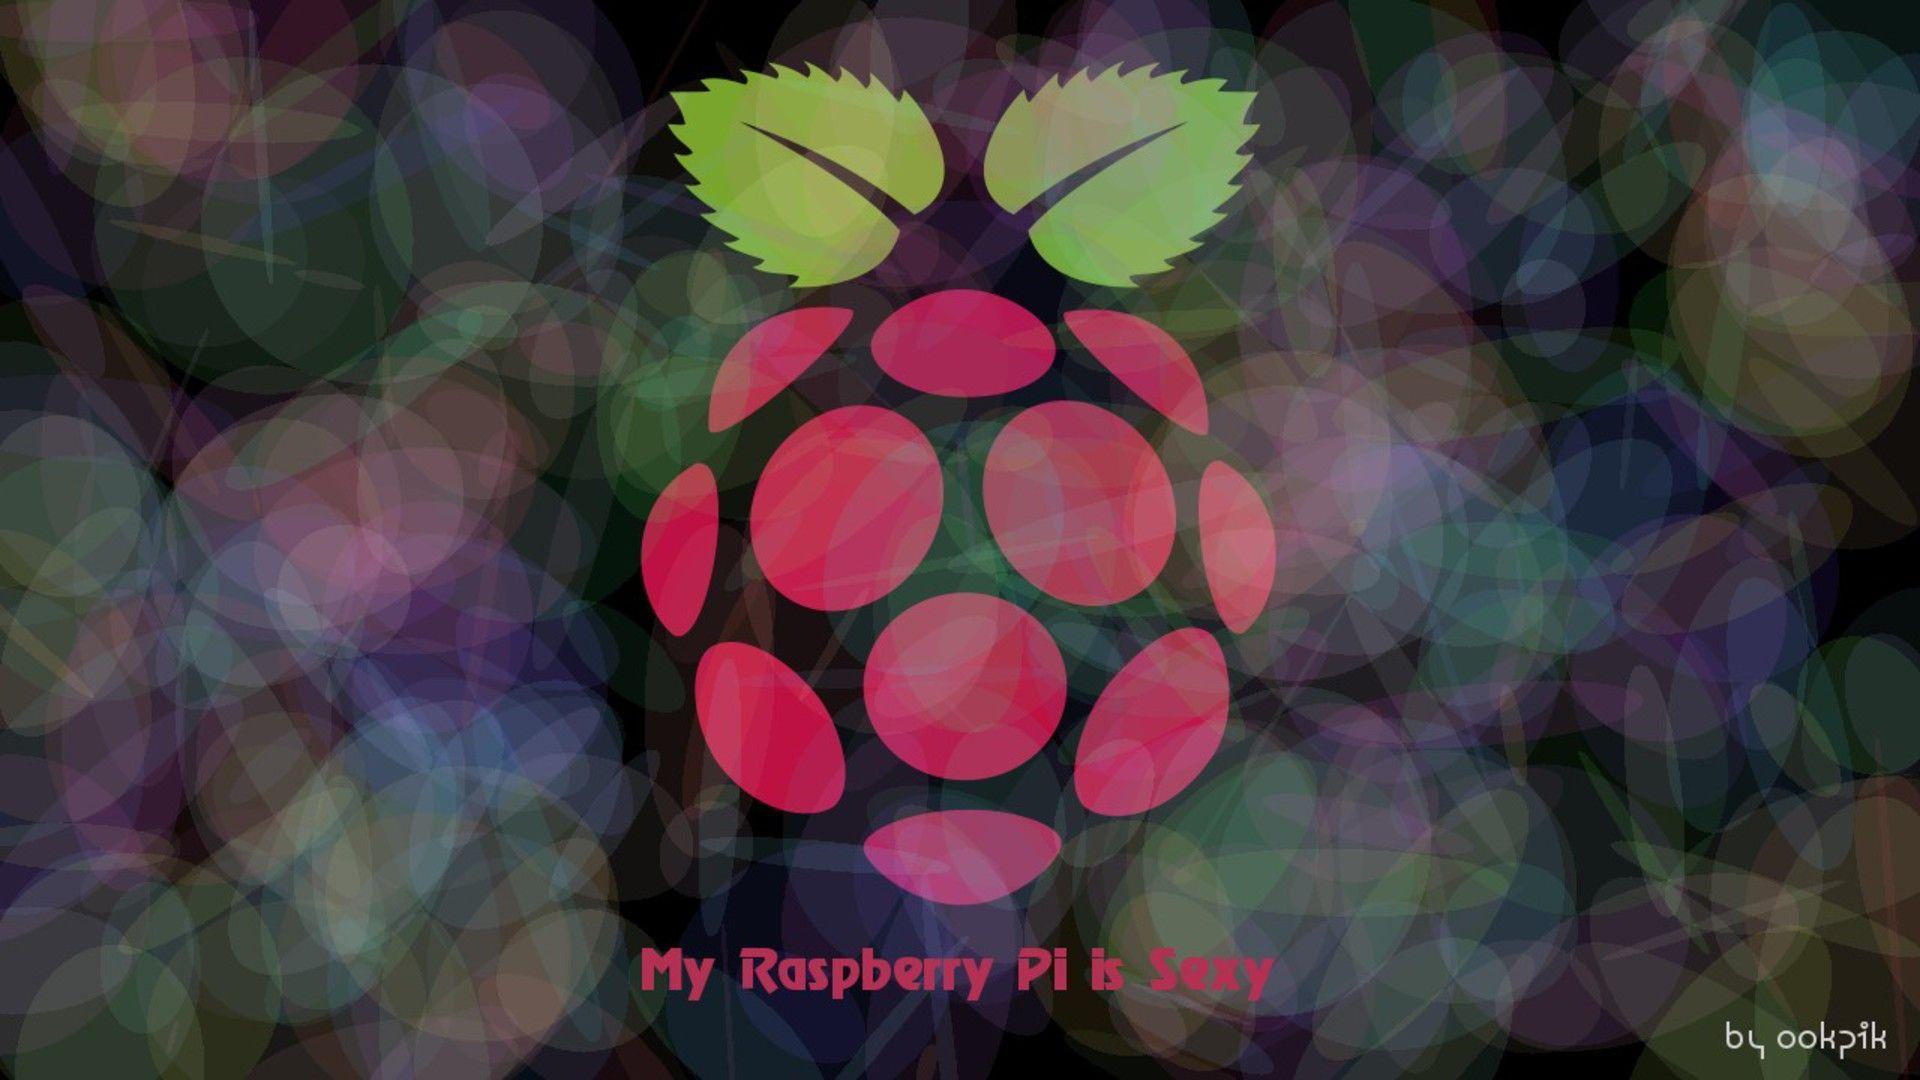 Rasberries raspberry pi wallpaper. PC